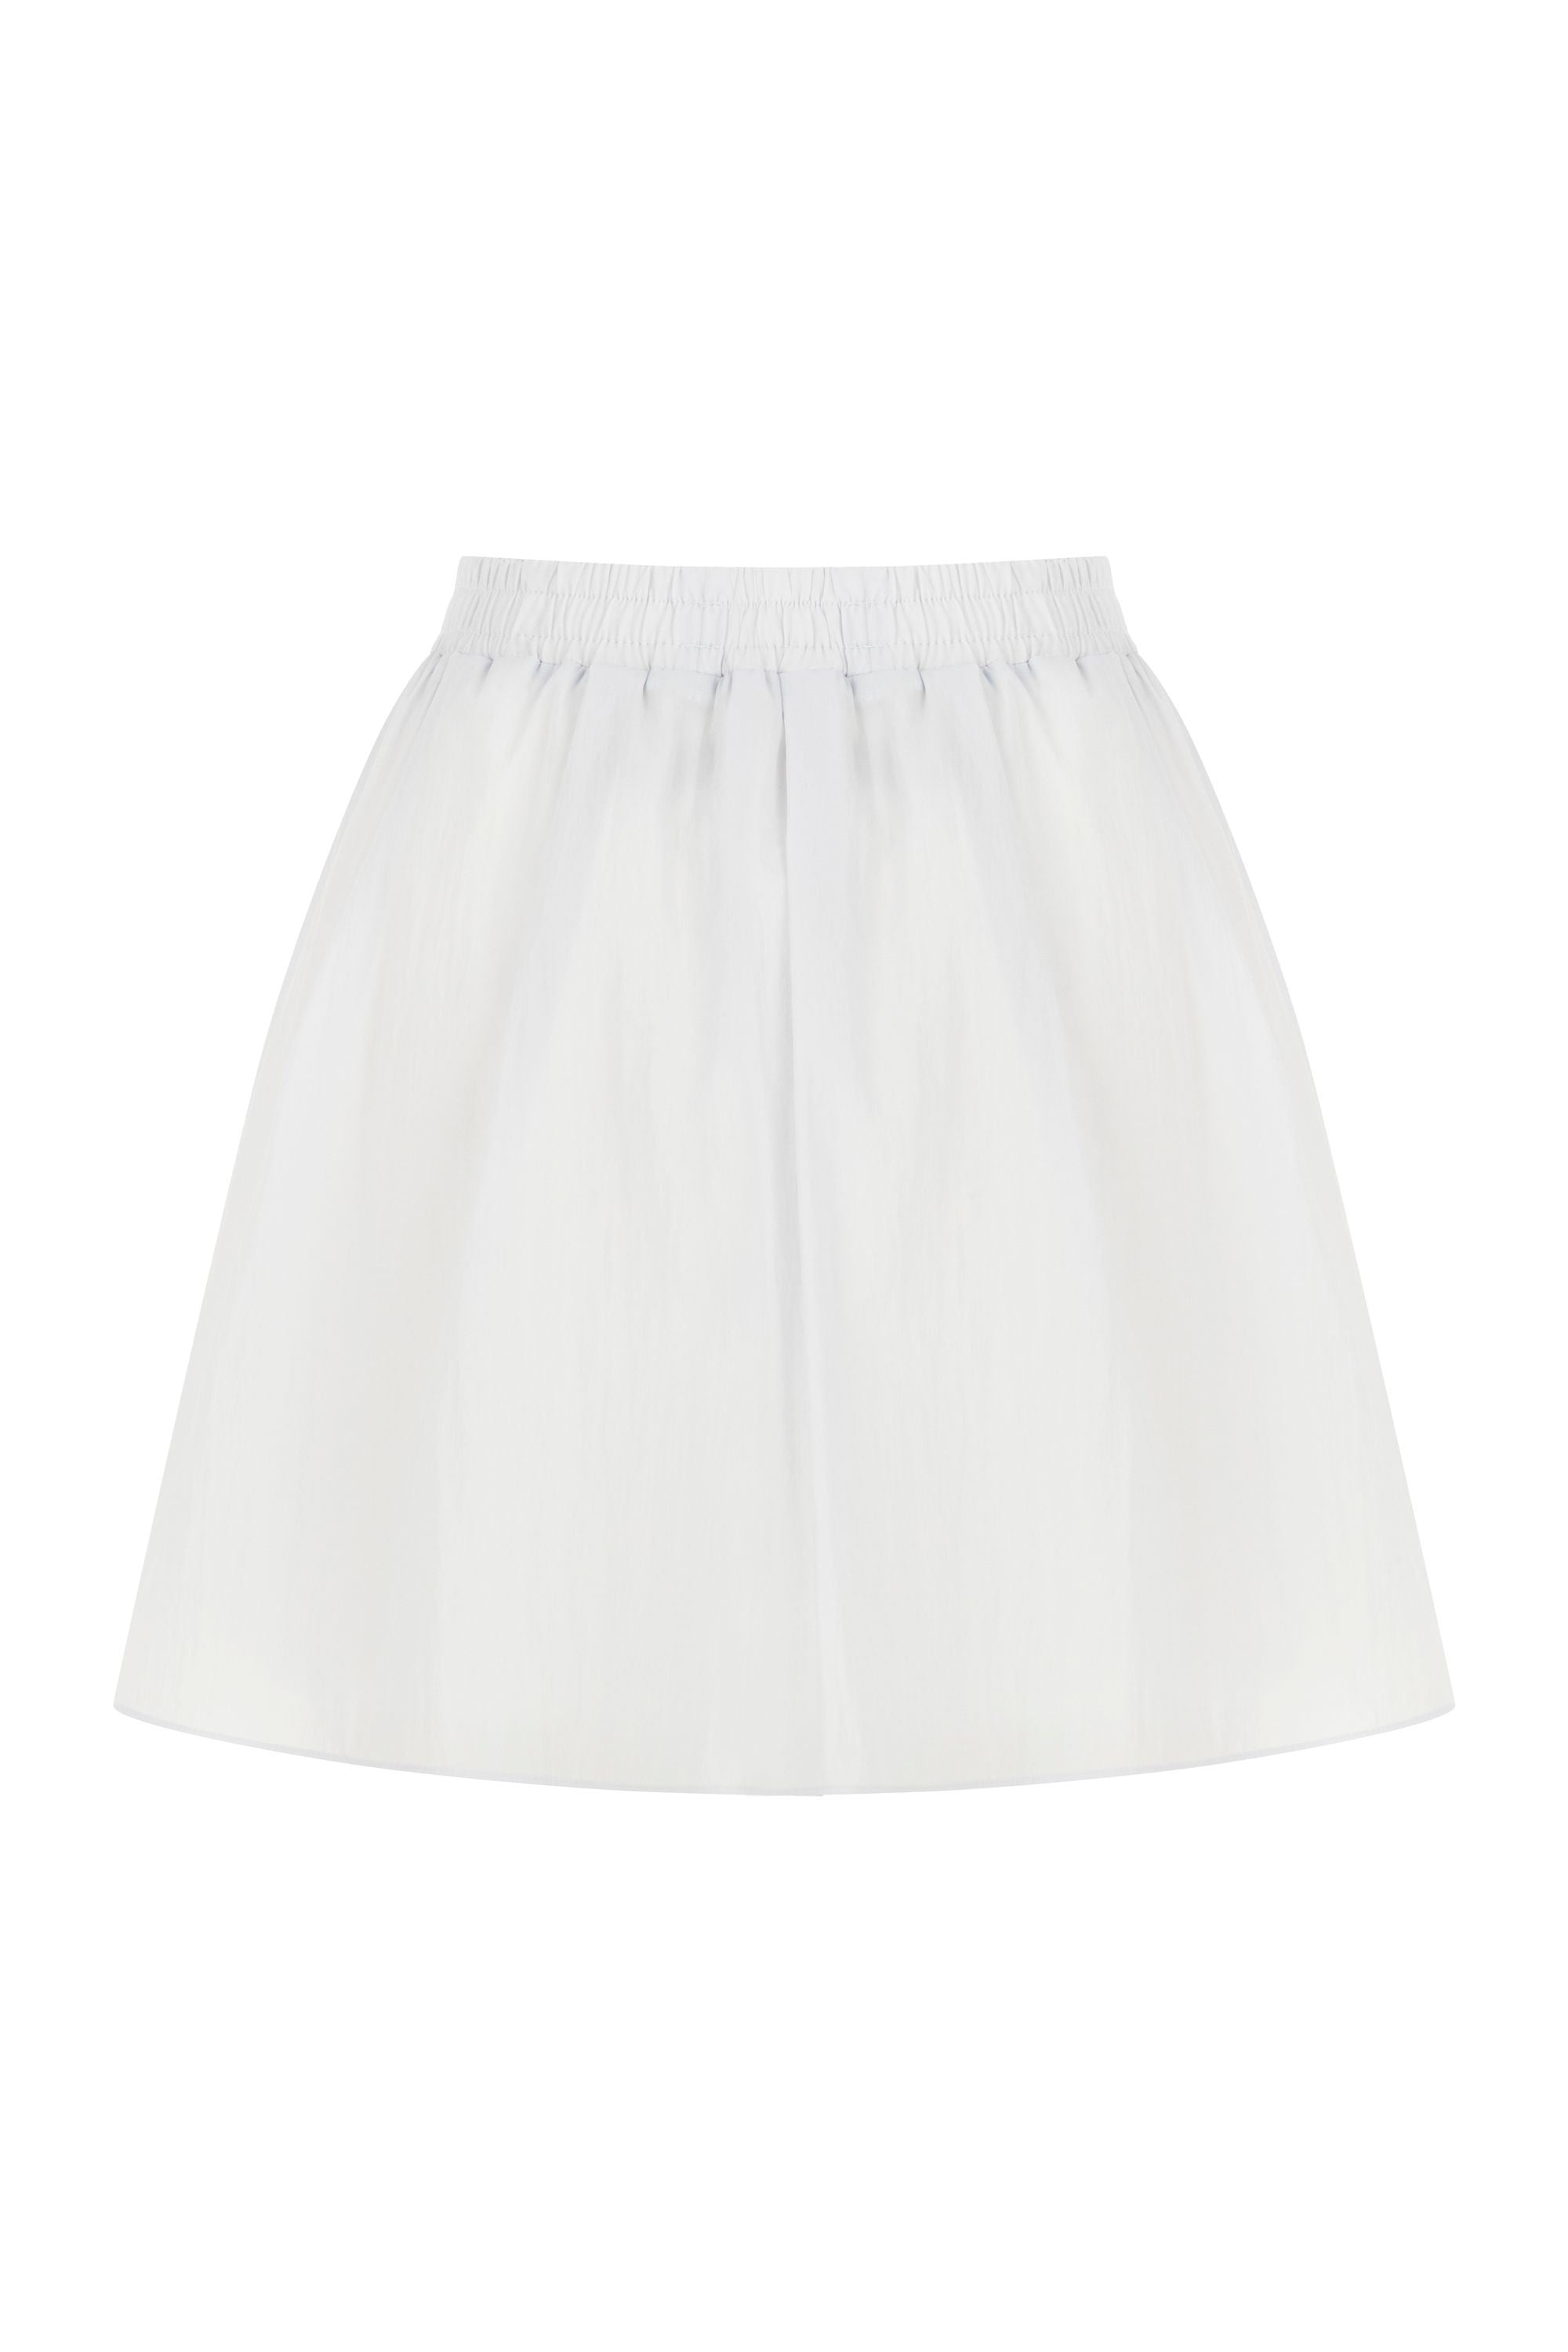 Nocturne Women's Pleated Mini Skirt-white